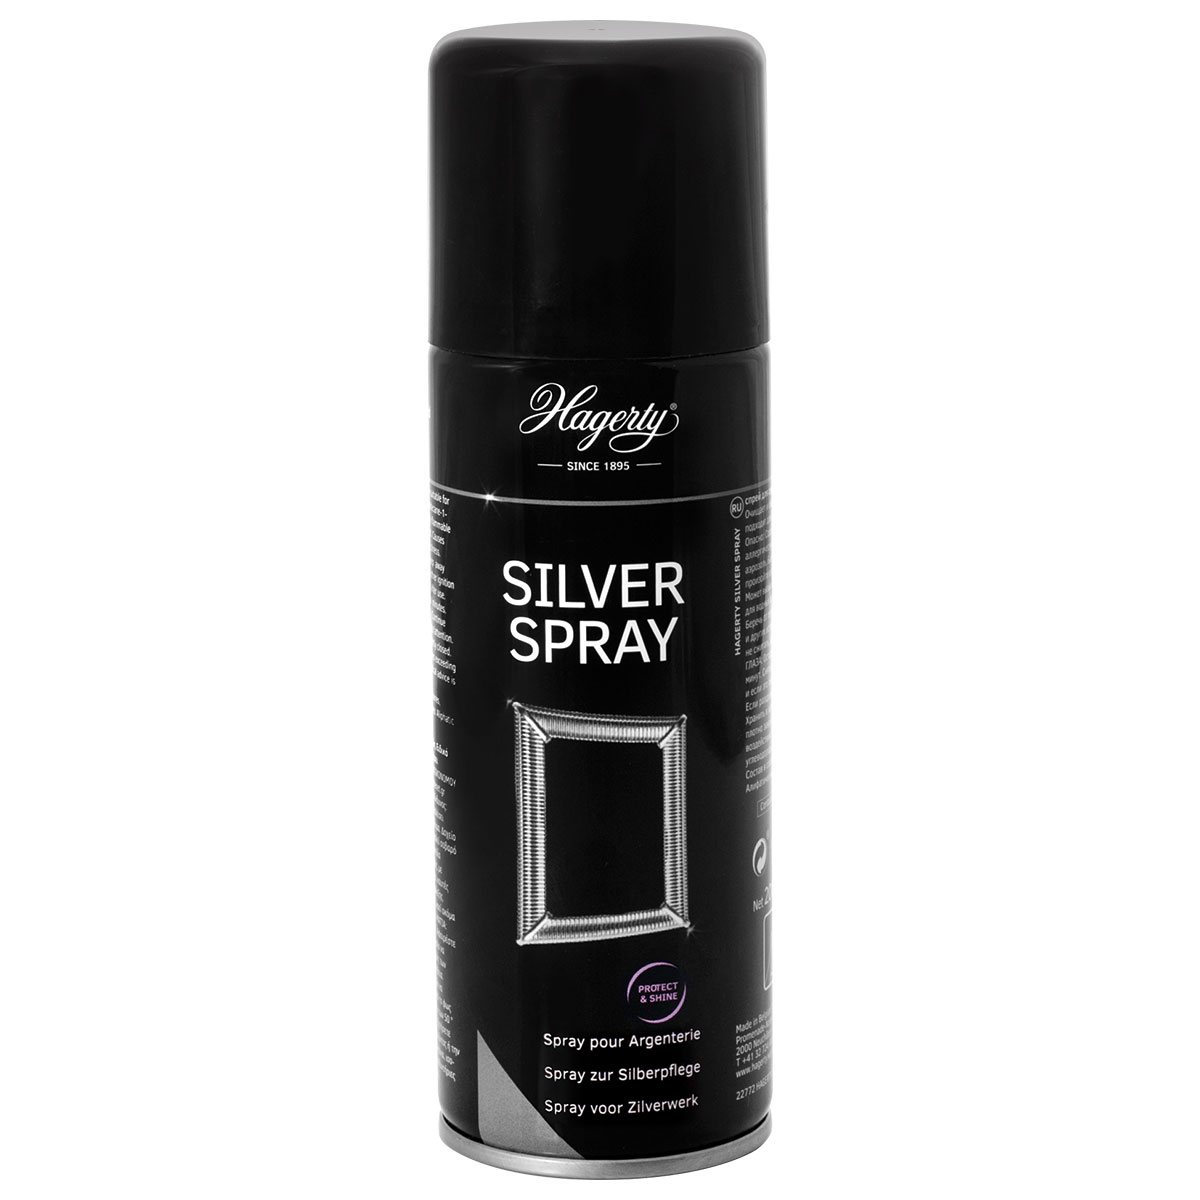 Hagerty Silver Spray, zilver verzorgingsproduct, 200 ml